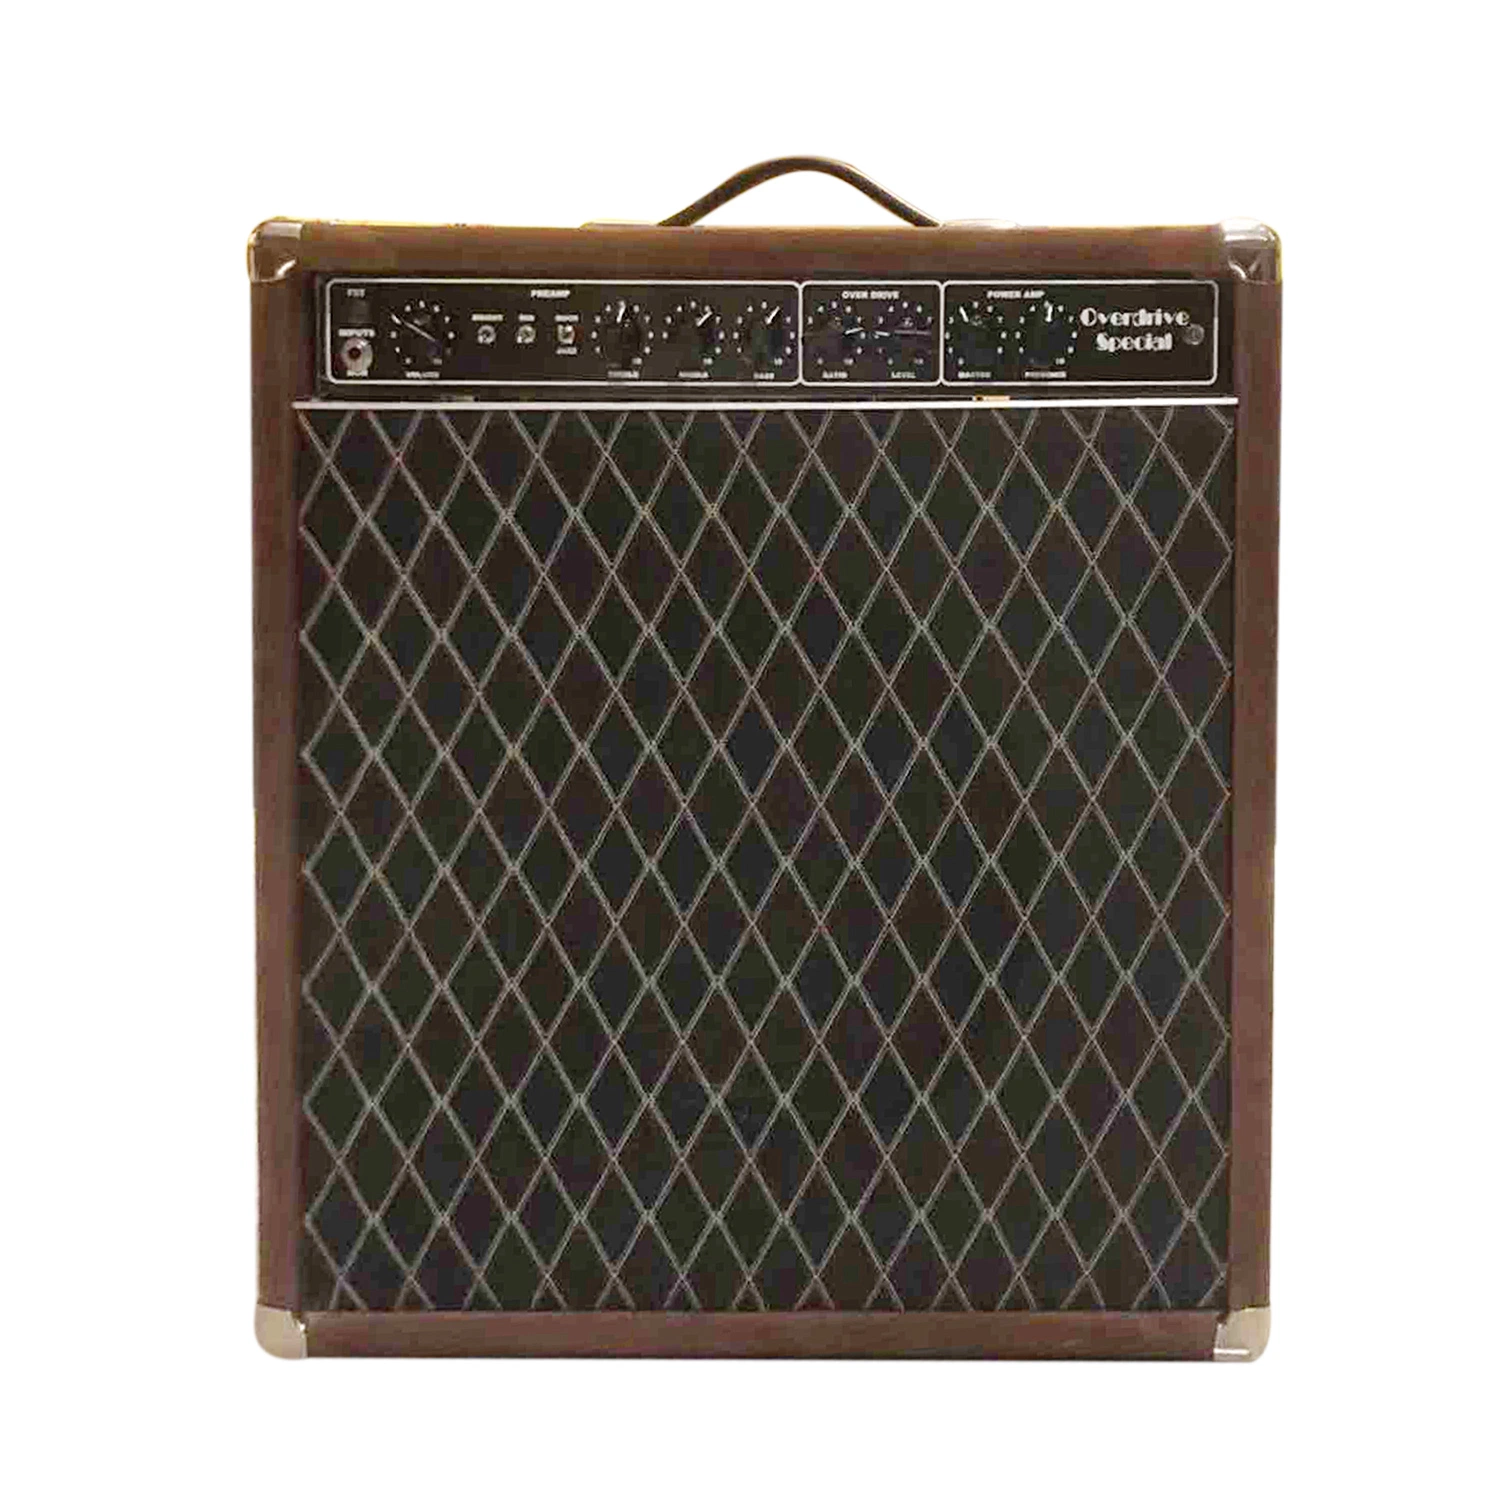 Custom Overdrive مضخم صوت ODS 20 واط من تصميم الغيتار الكهربائي طراز Dumble Toming، Jcm800 Plexi1959 Vintage Tone الكهربائية الغيتار مصنعي المعدات الأصلية